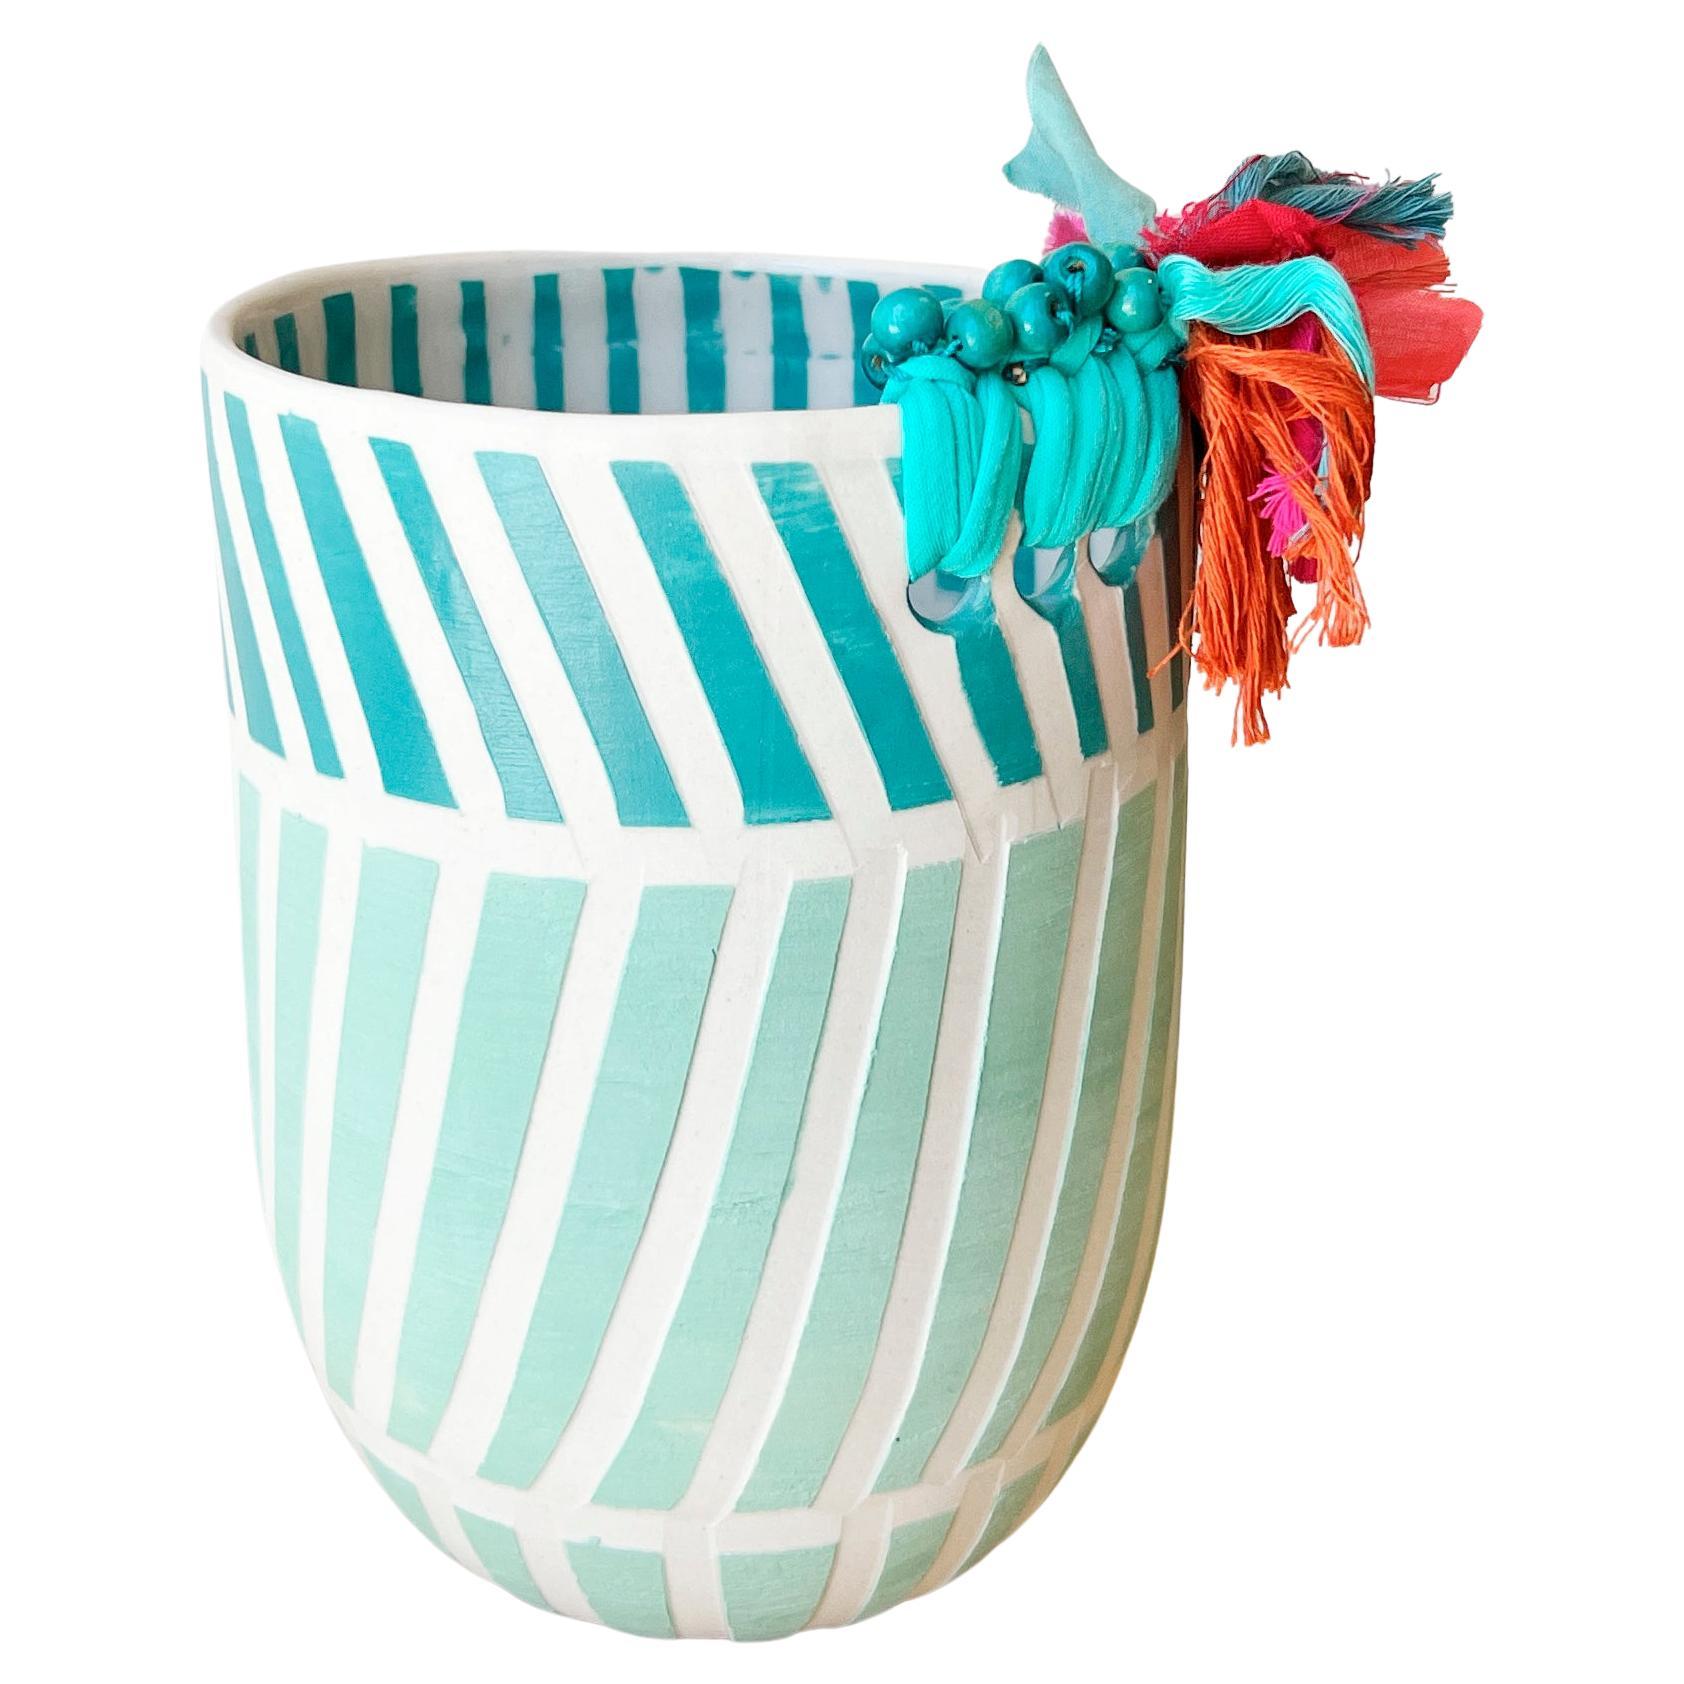 Festa Whimsical Handmade Ceramic Vase in Blue, Teal, Pink from Portugal For Sale